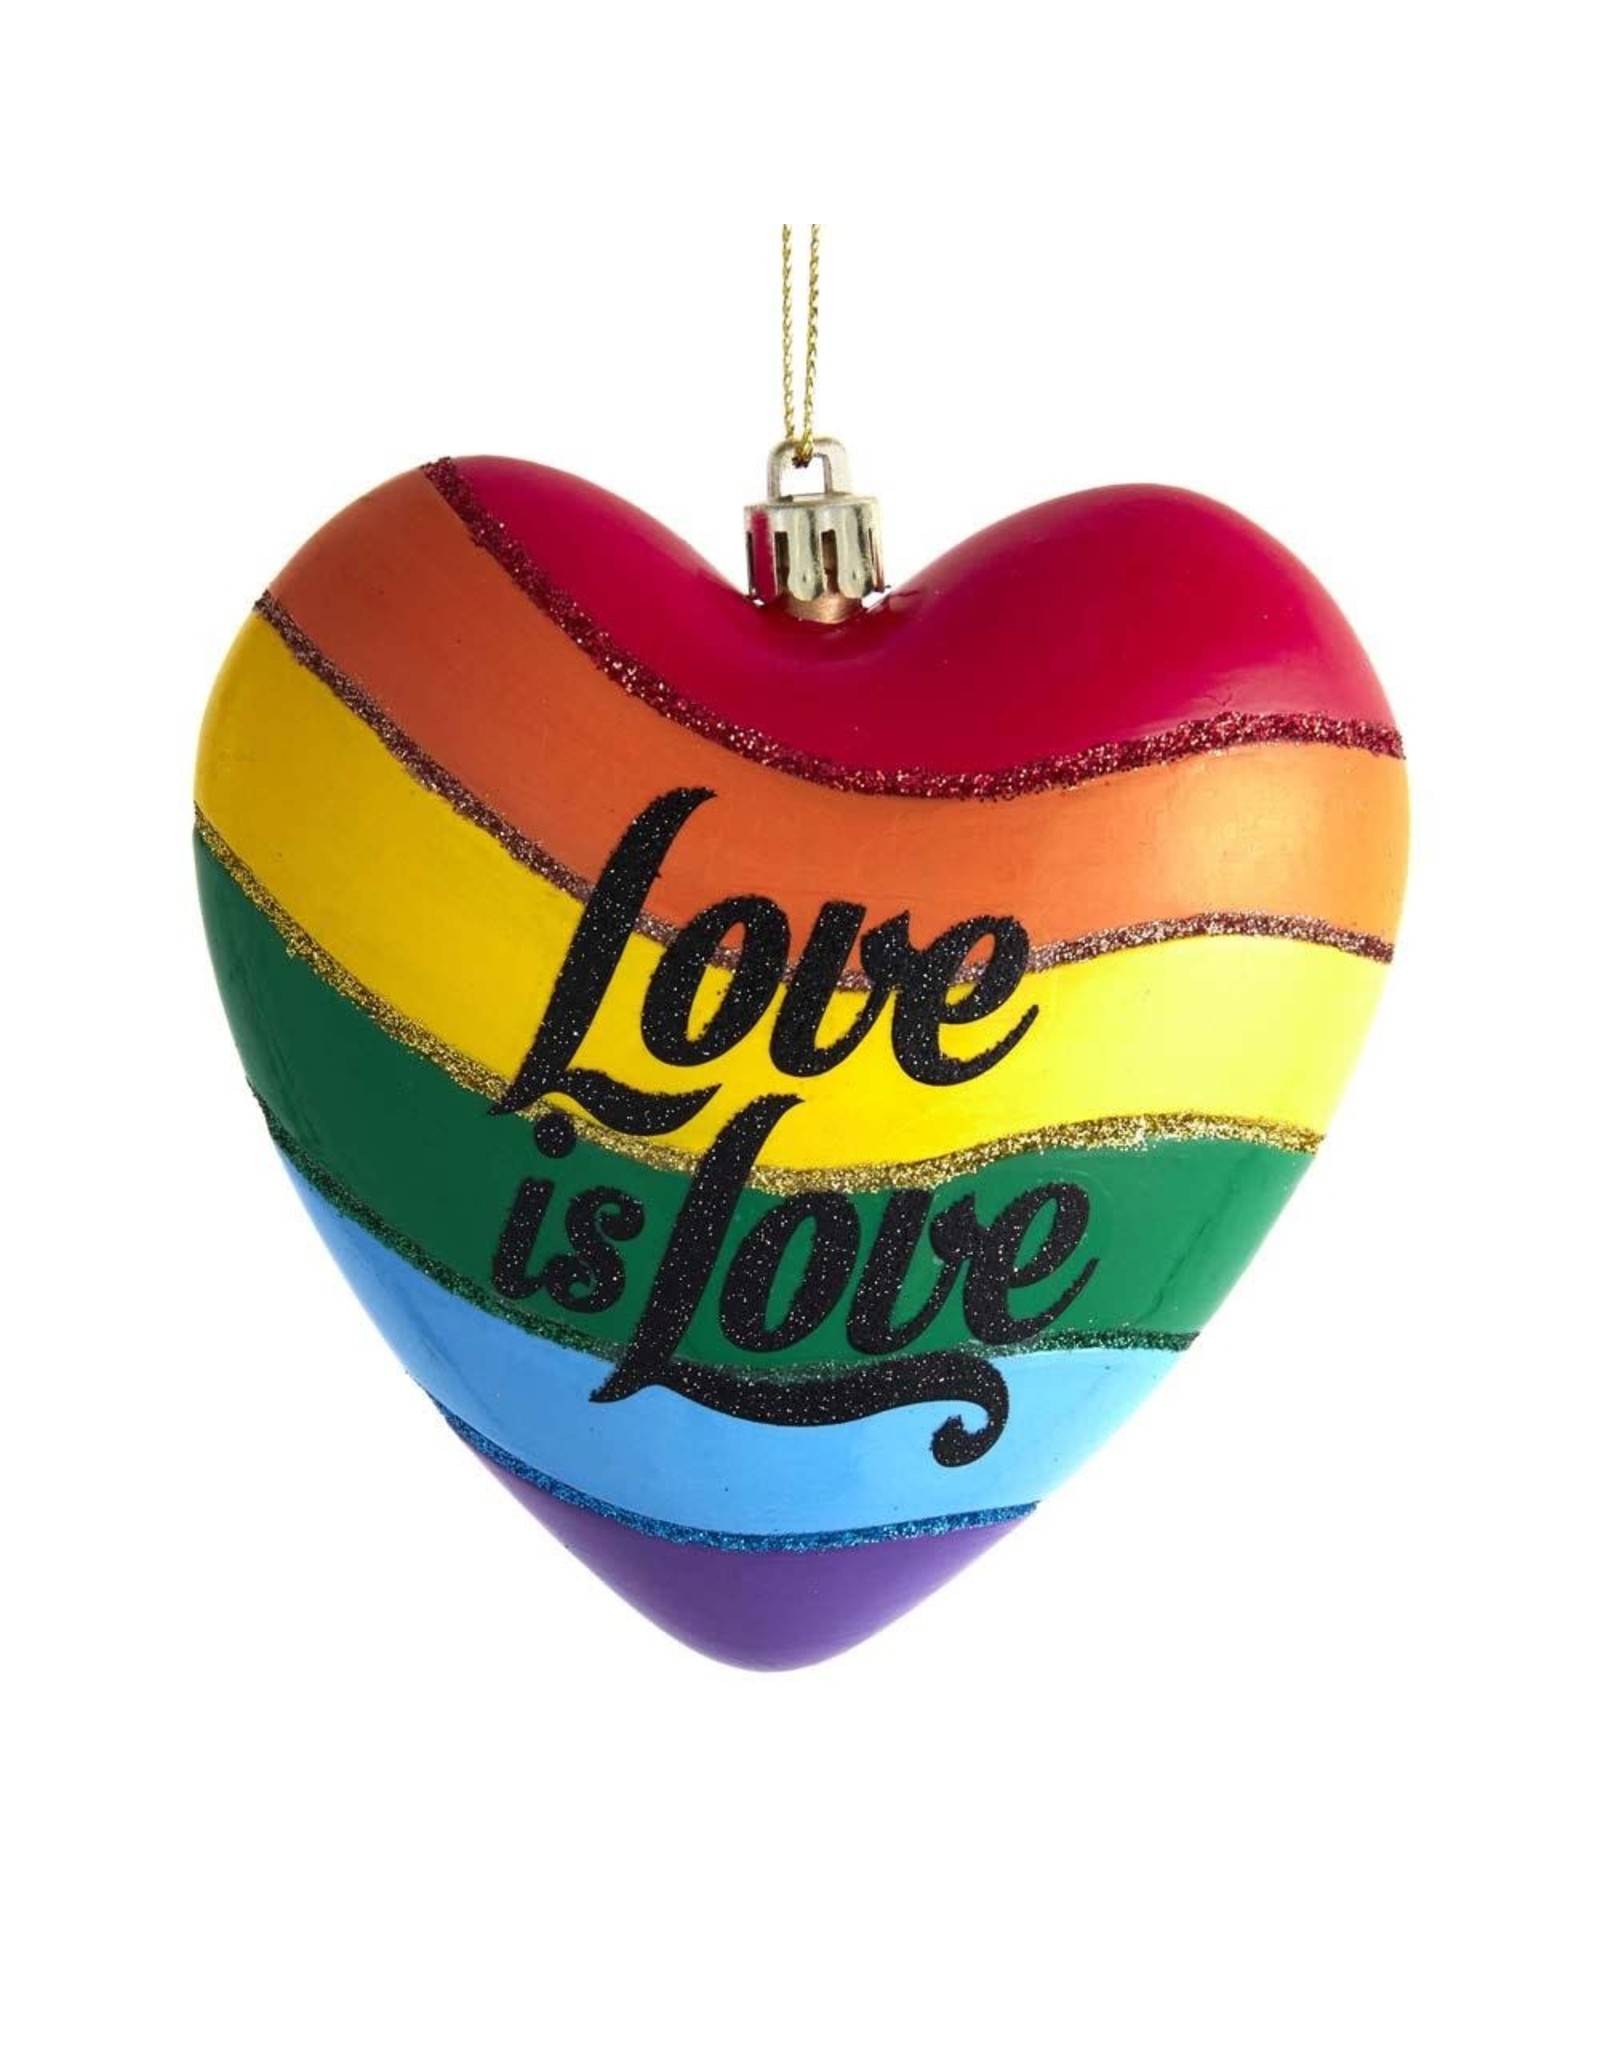 Kurt Adler Gay Pride Rainbow Love Is Love Heart Ornament